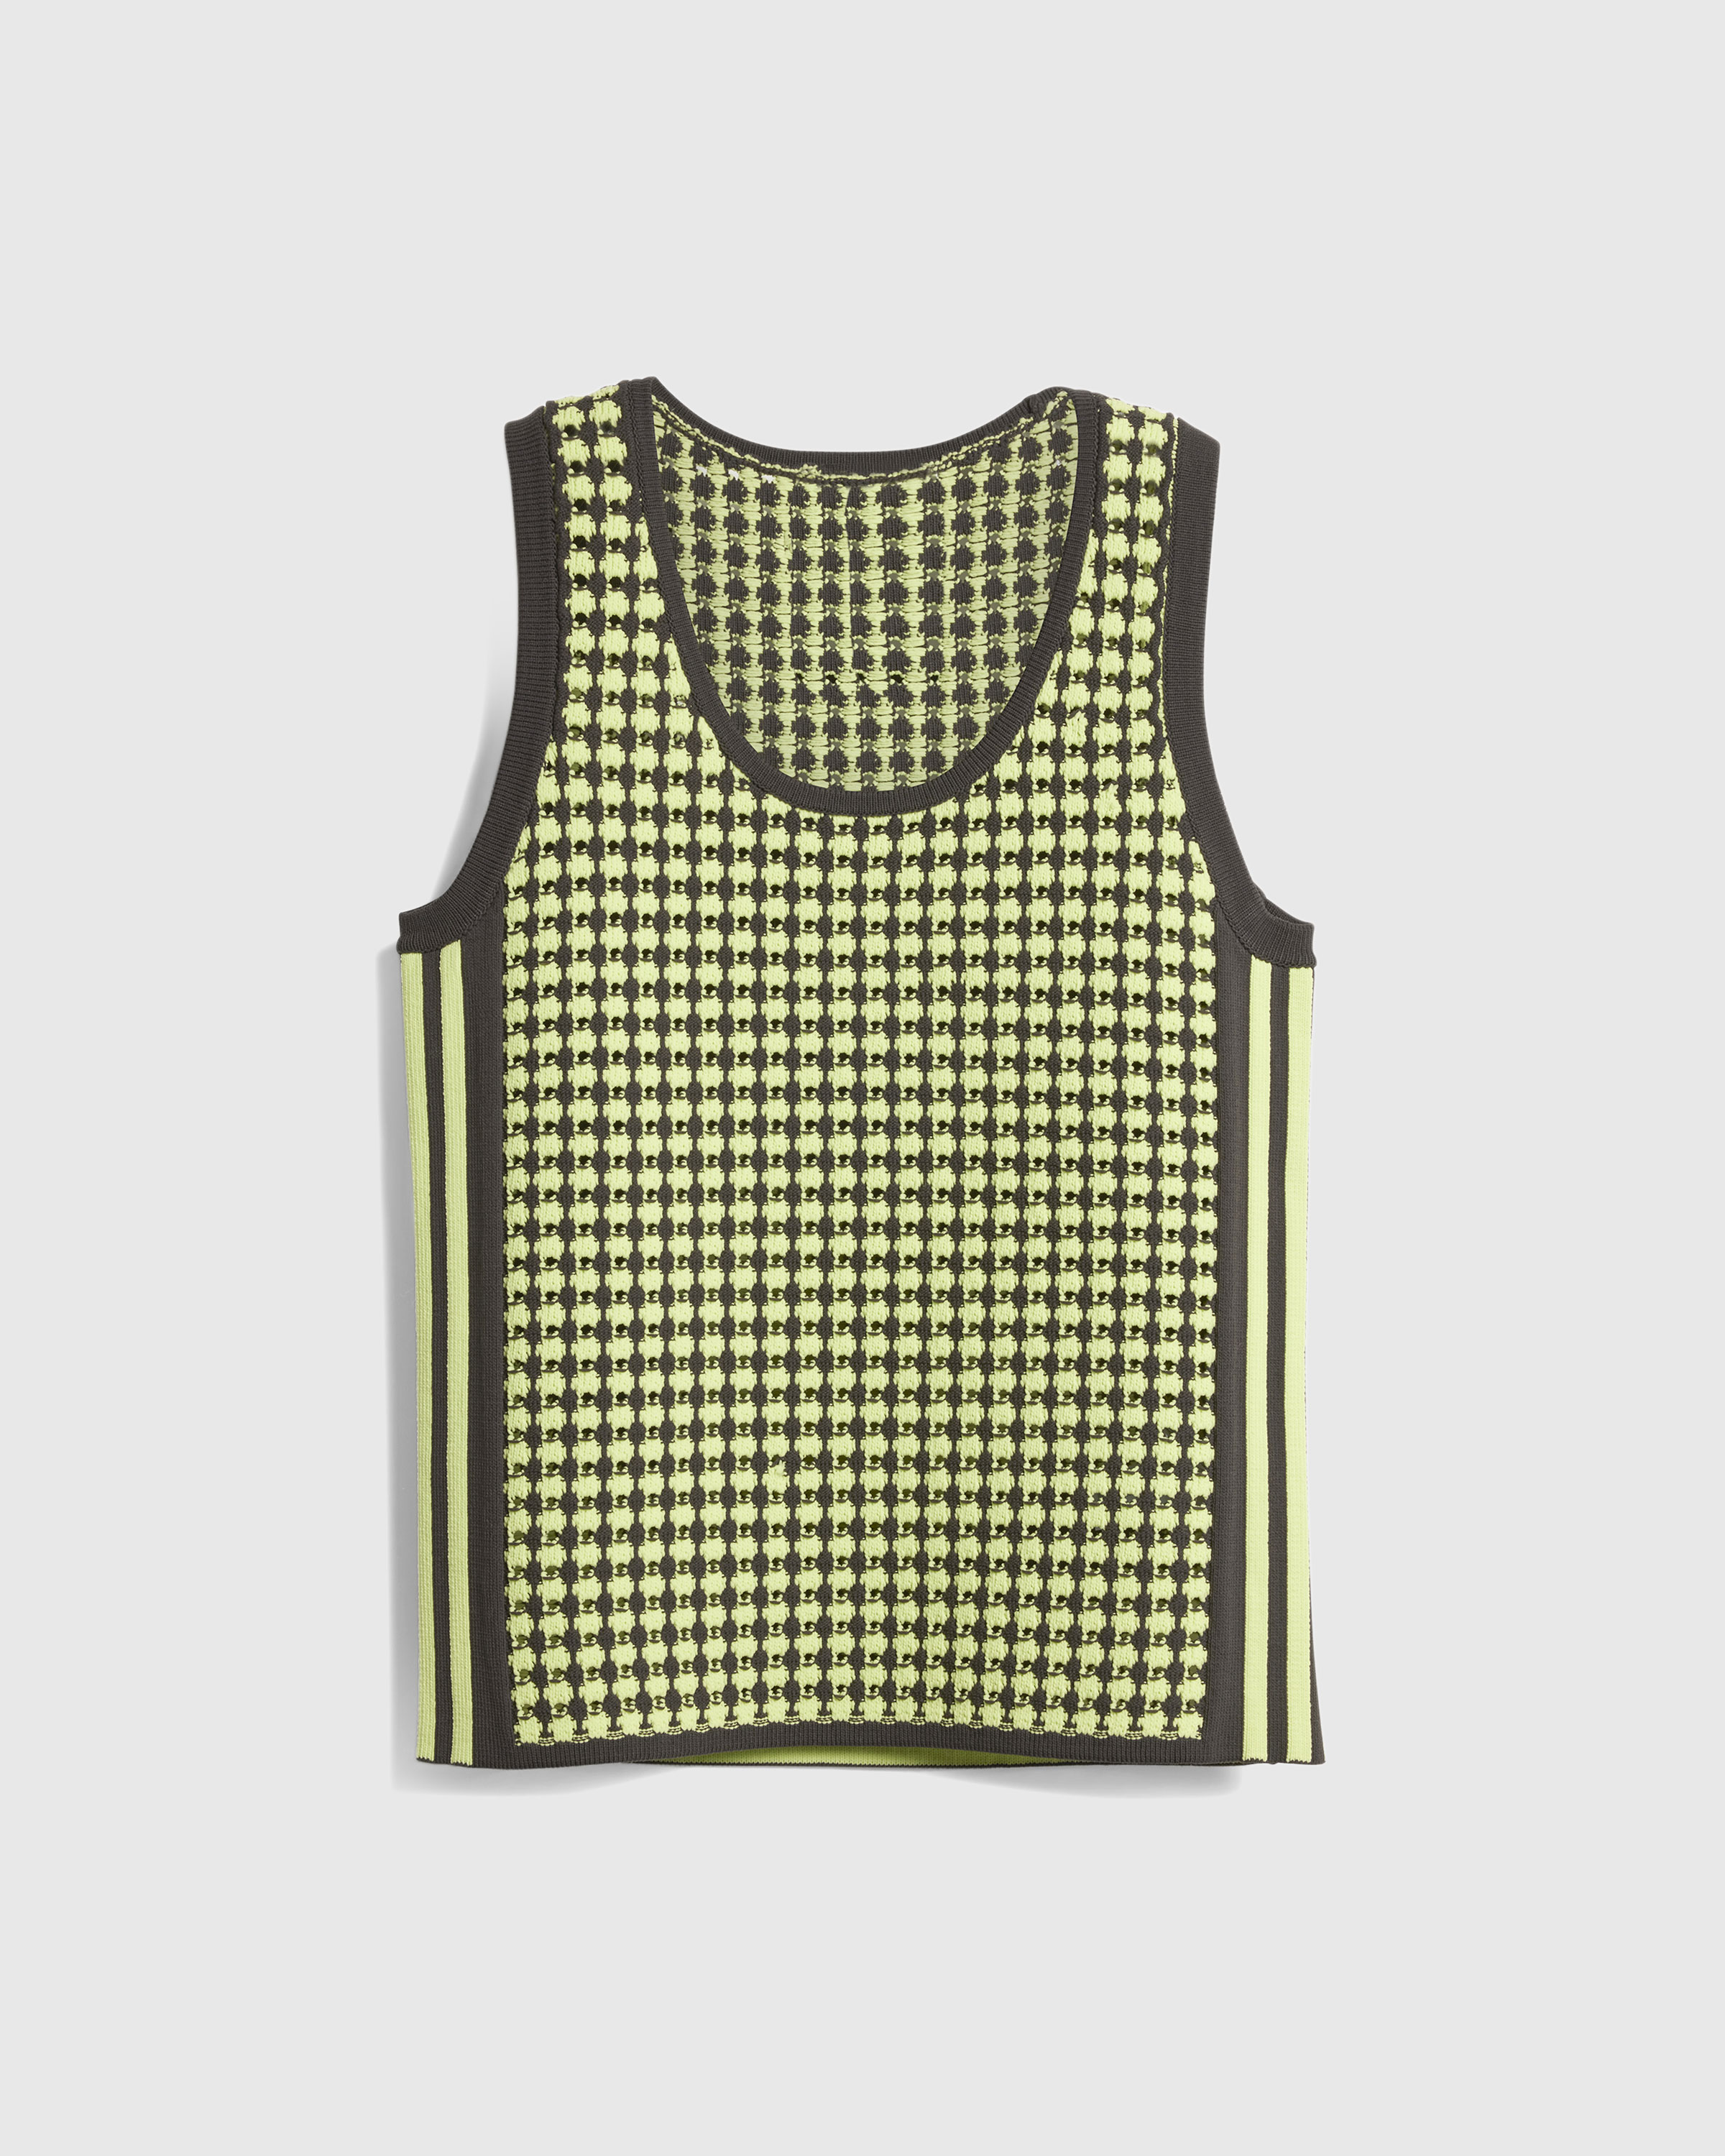 Adidas x Wales Bonner – Knit Vest Semi Frozen Yellow/Night Brown - Tank Tops - Yellow - Image 1